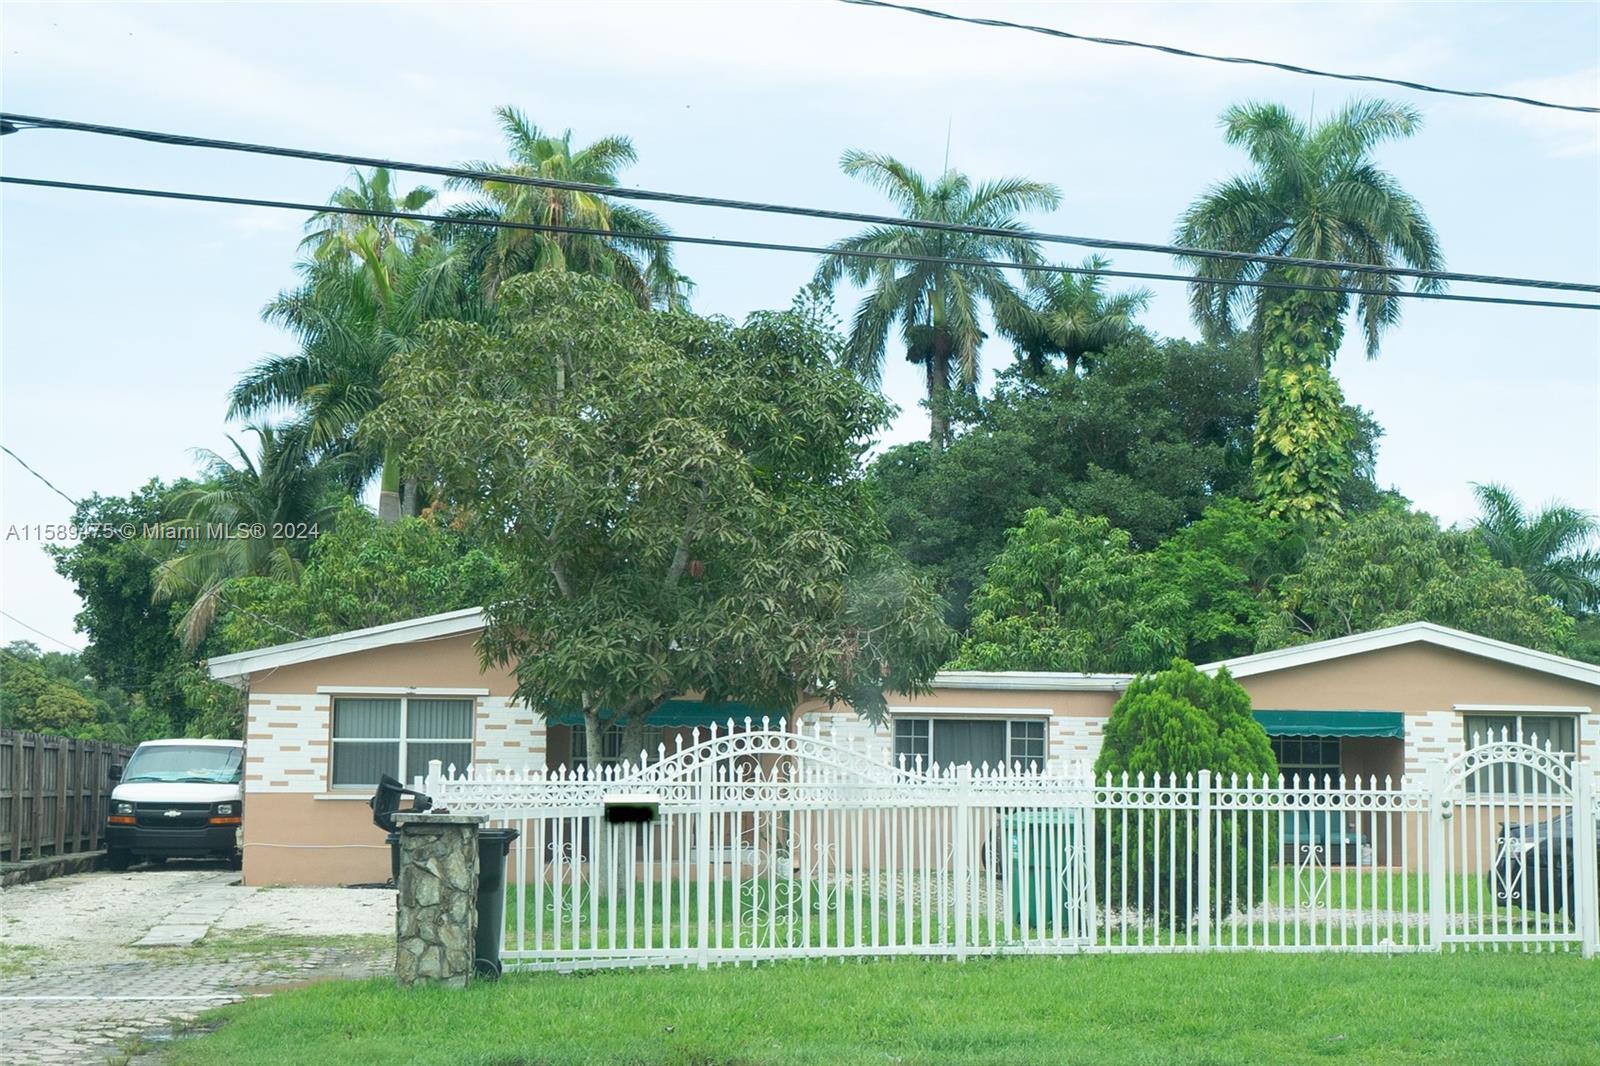 Rental Property at 13341 Ne 3Ct, North Miami, Miami-Dade County, Florida -  - $825,465 MO.